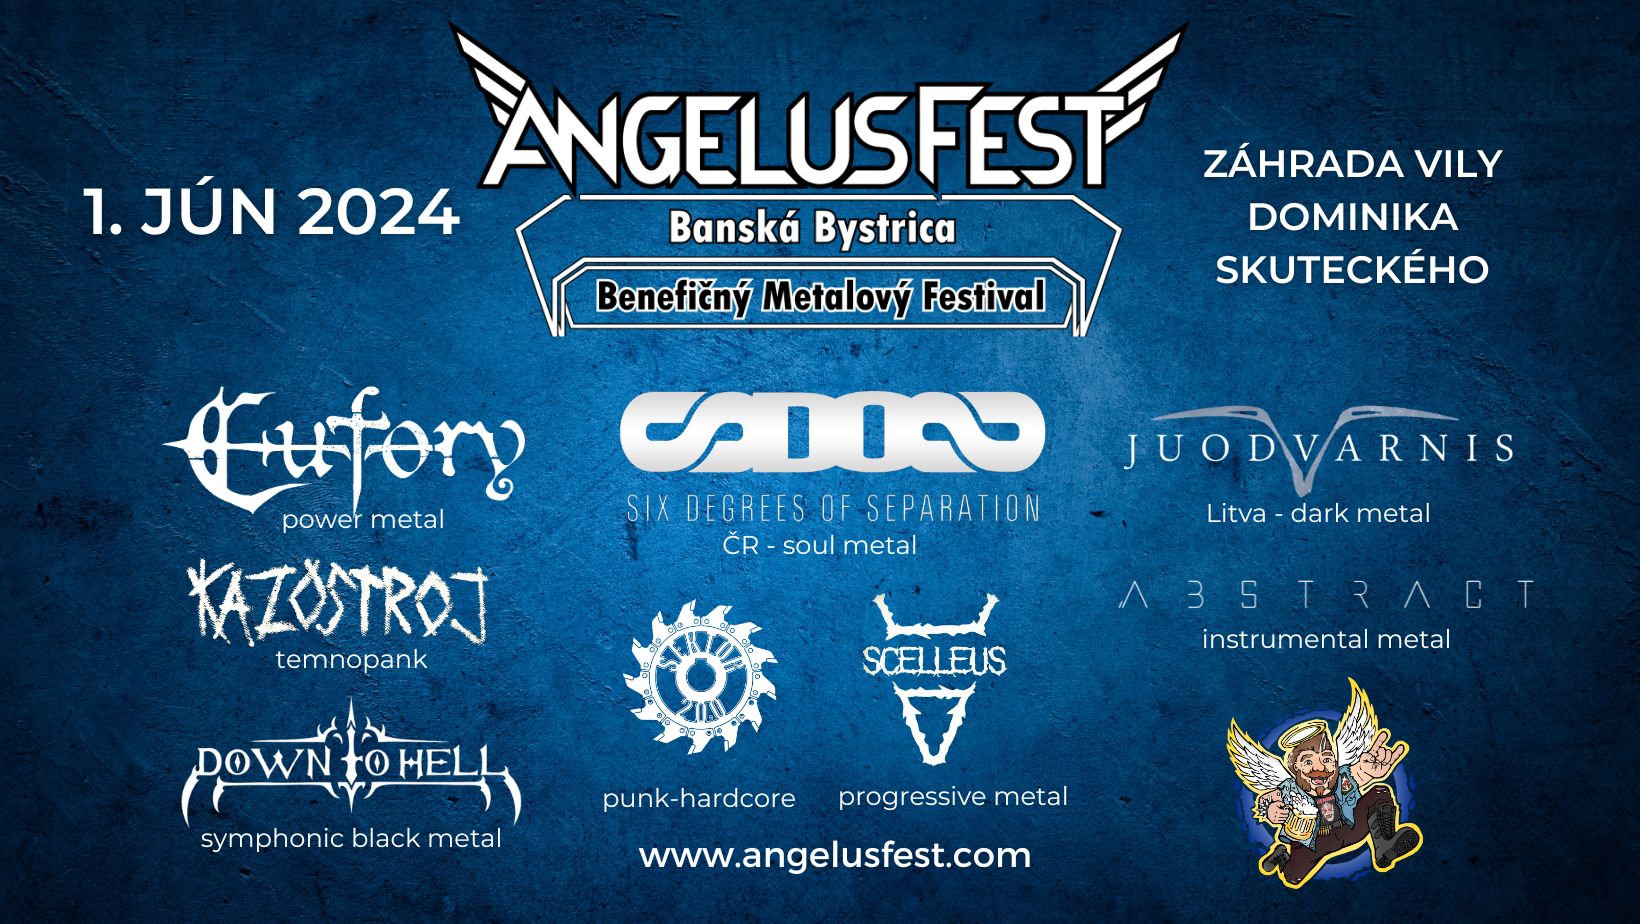 Angelusfest - plagát - 2022